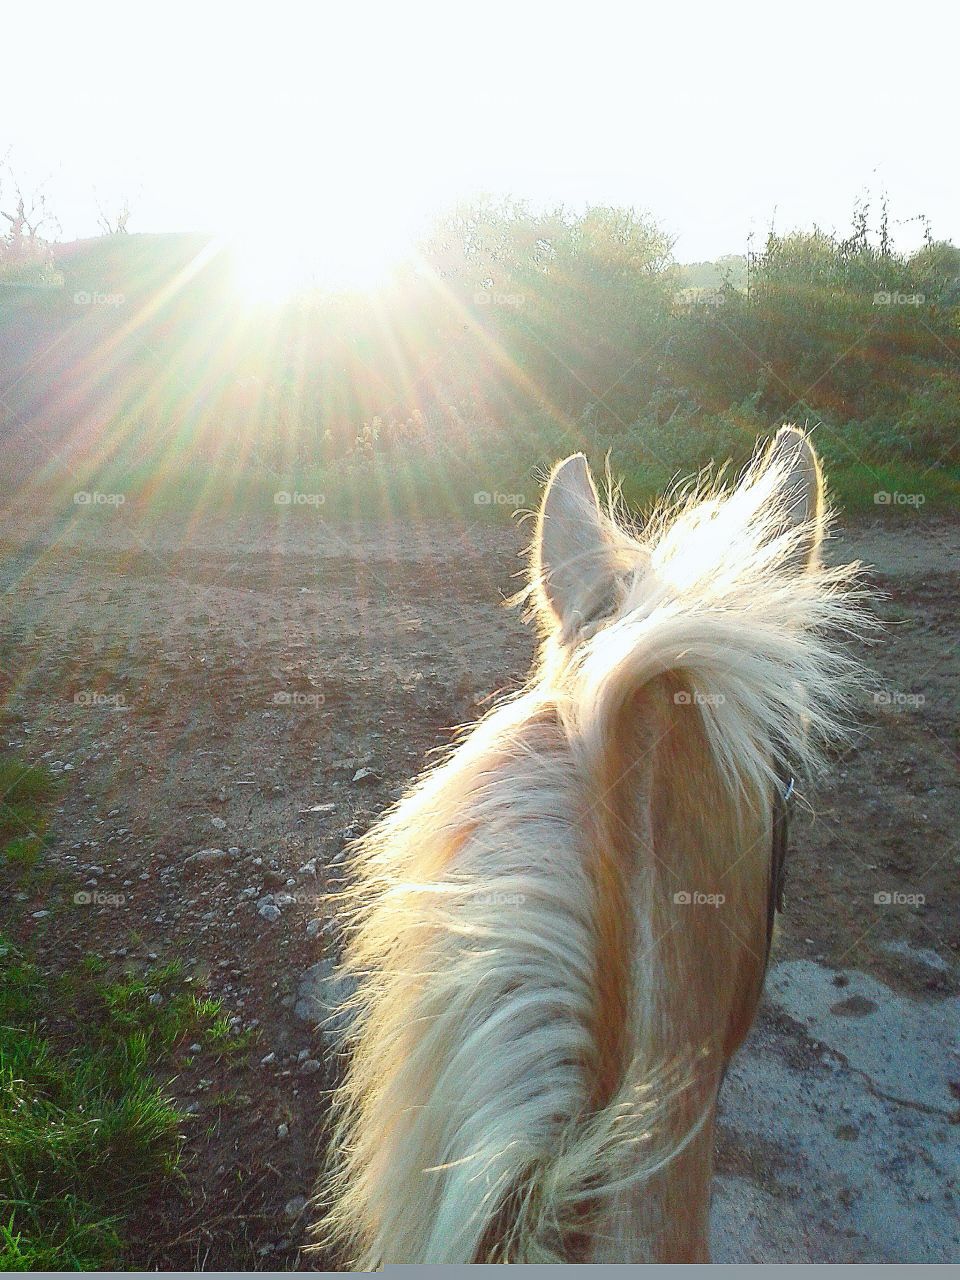 Sunbeam over the horse's head